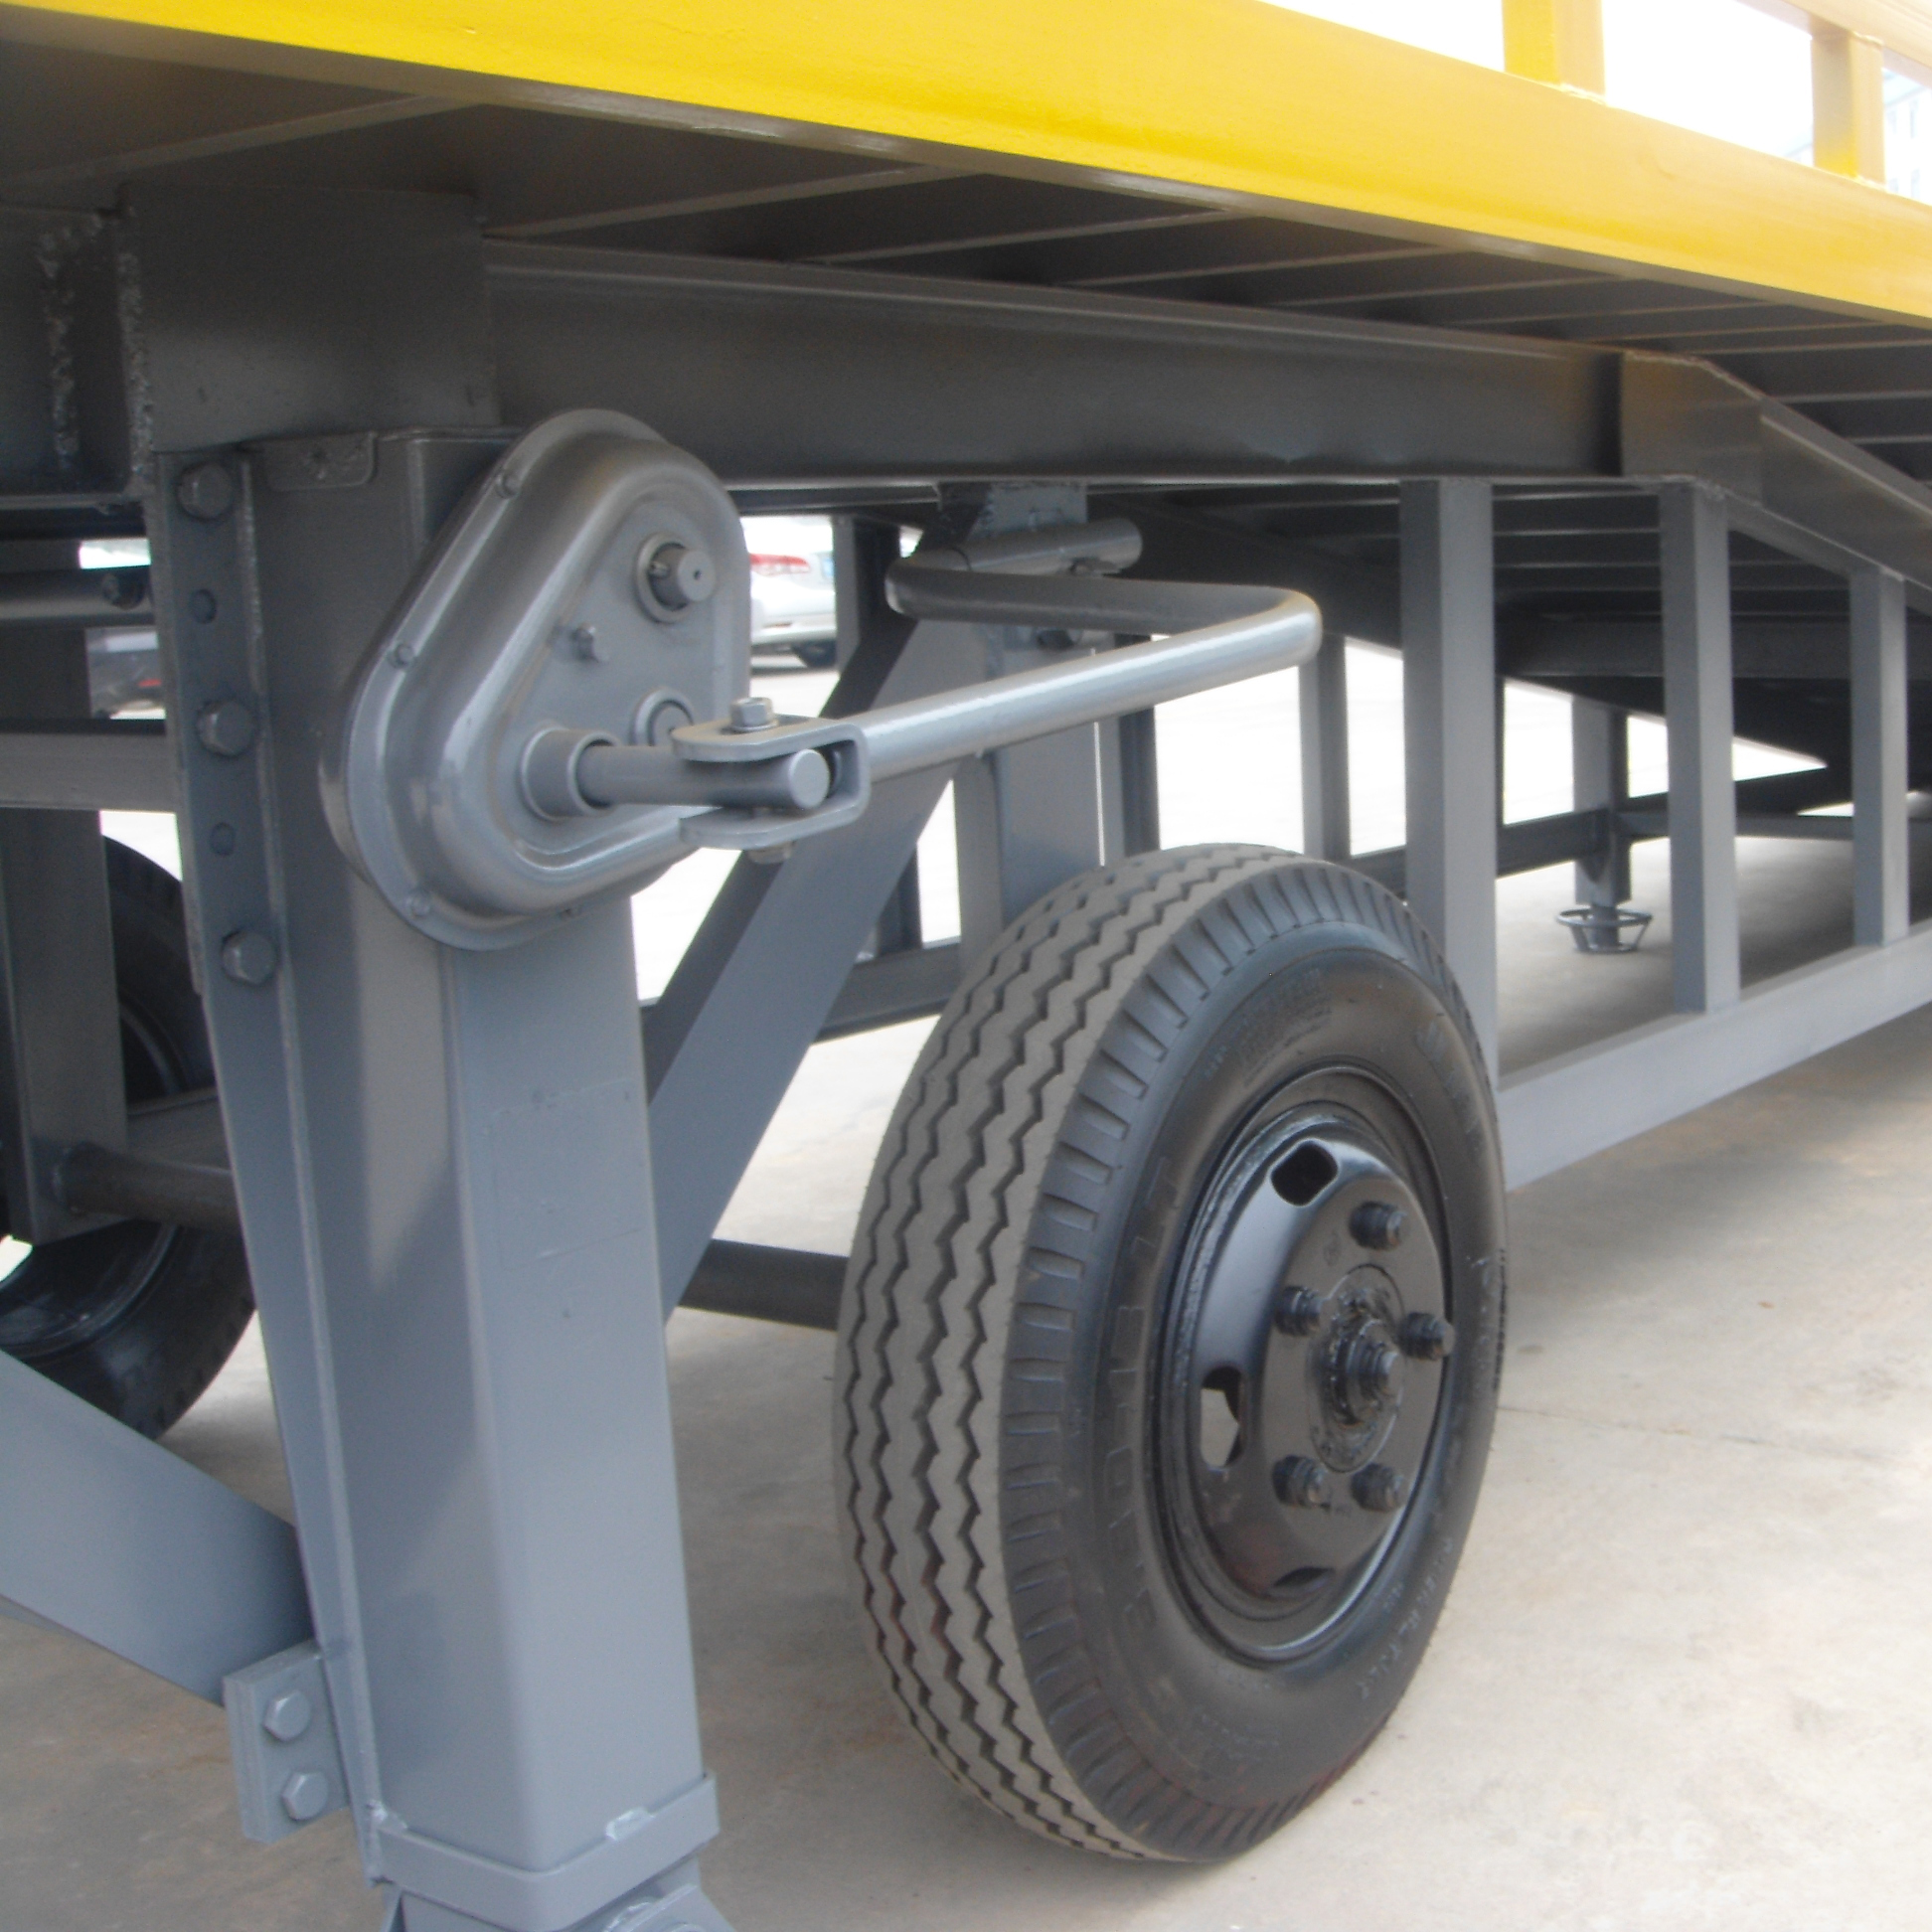 NIULI Yard Ramp Edge Forklift Truck Loading Container Hydraulic Dock Leveler for Warehousing Equipment